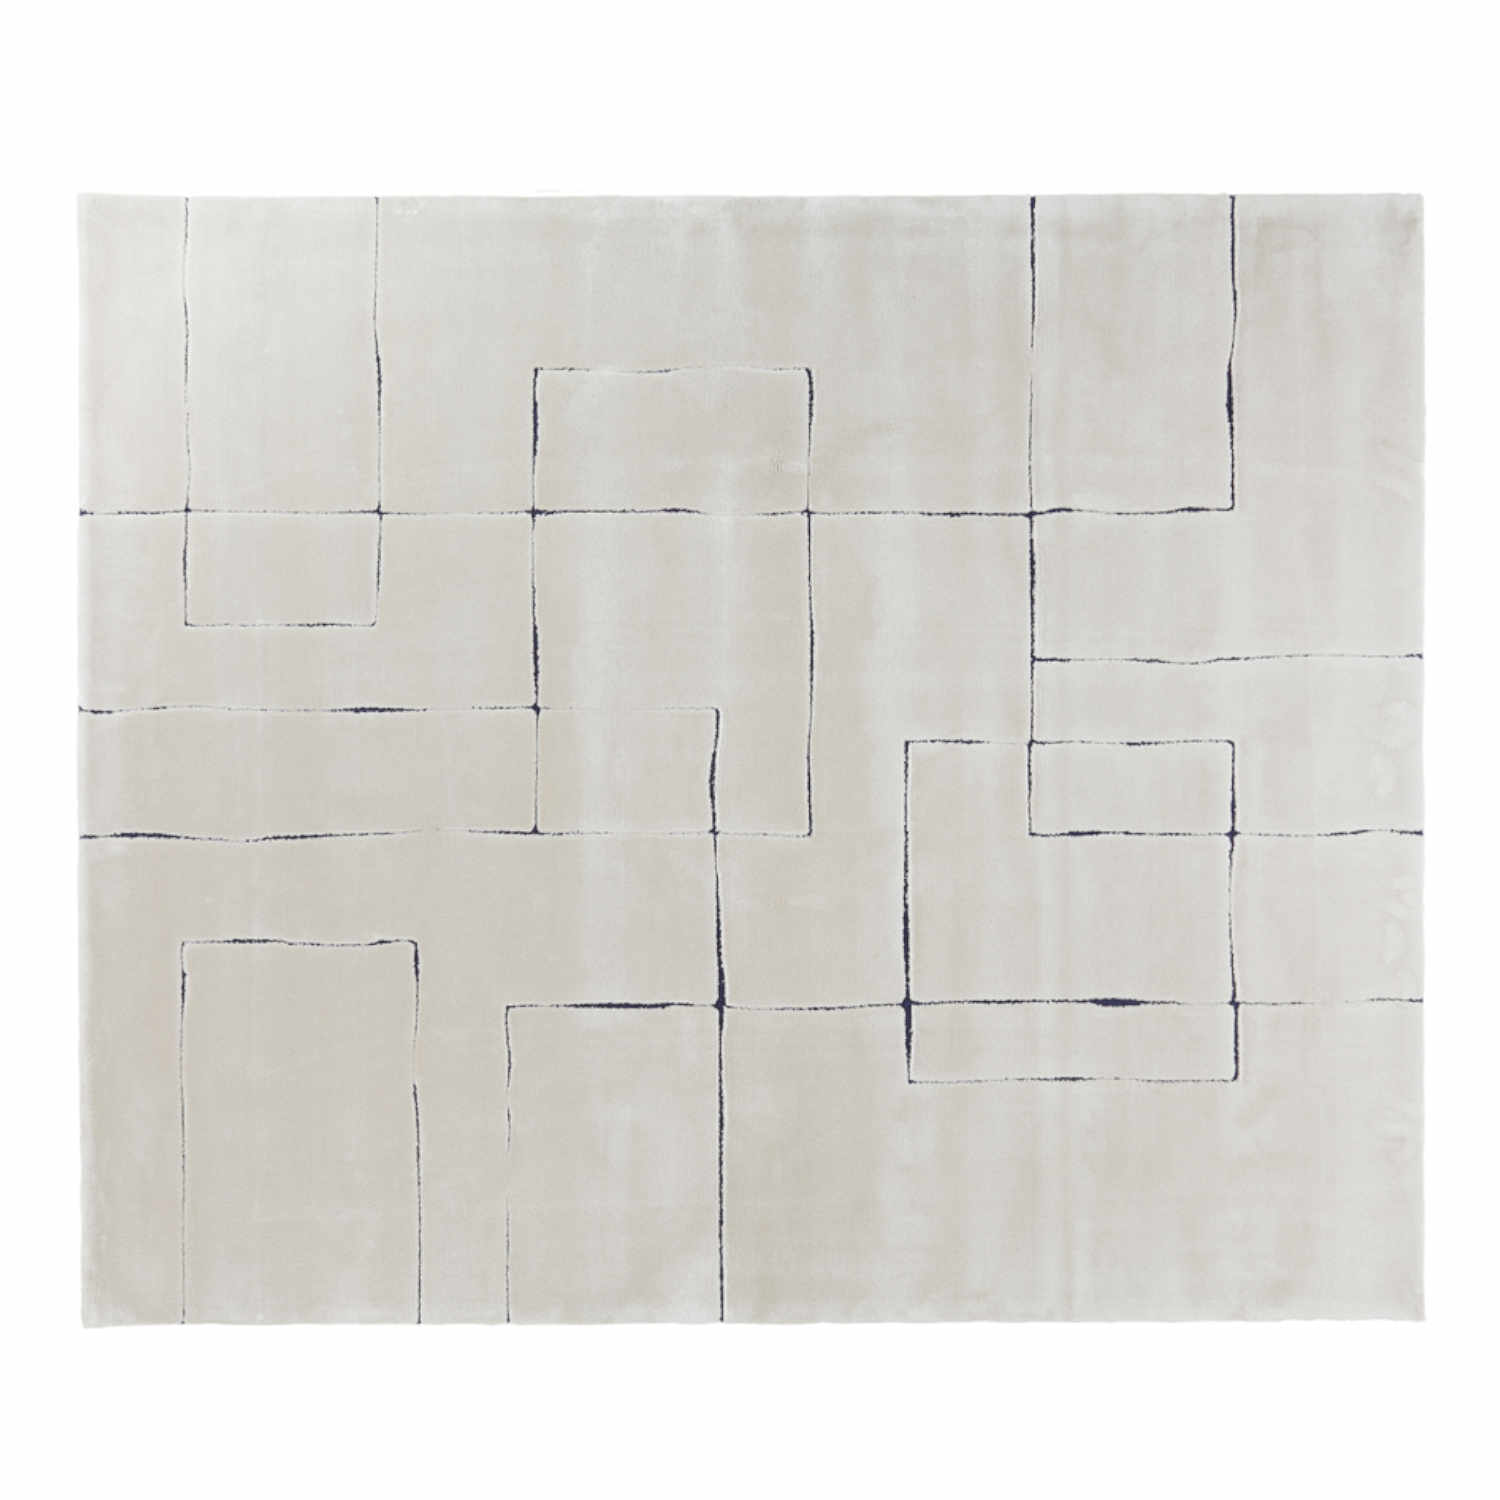 SubZero Teppich, Grösse 300 x 400 cm, Farbe glacy gray port royal von miinu